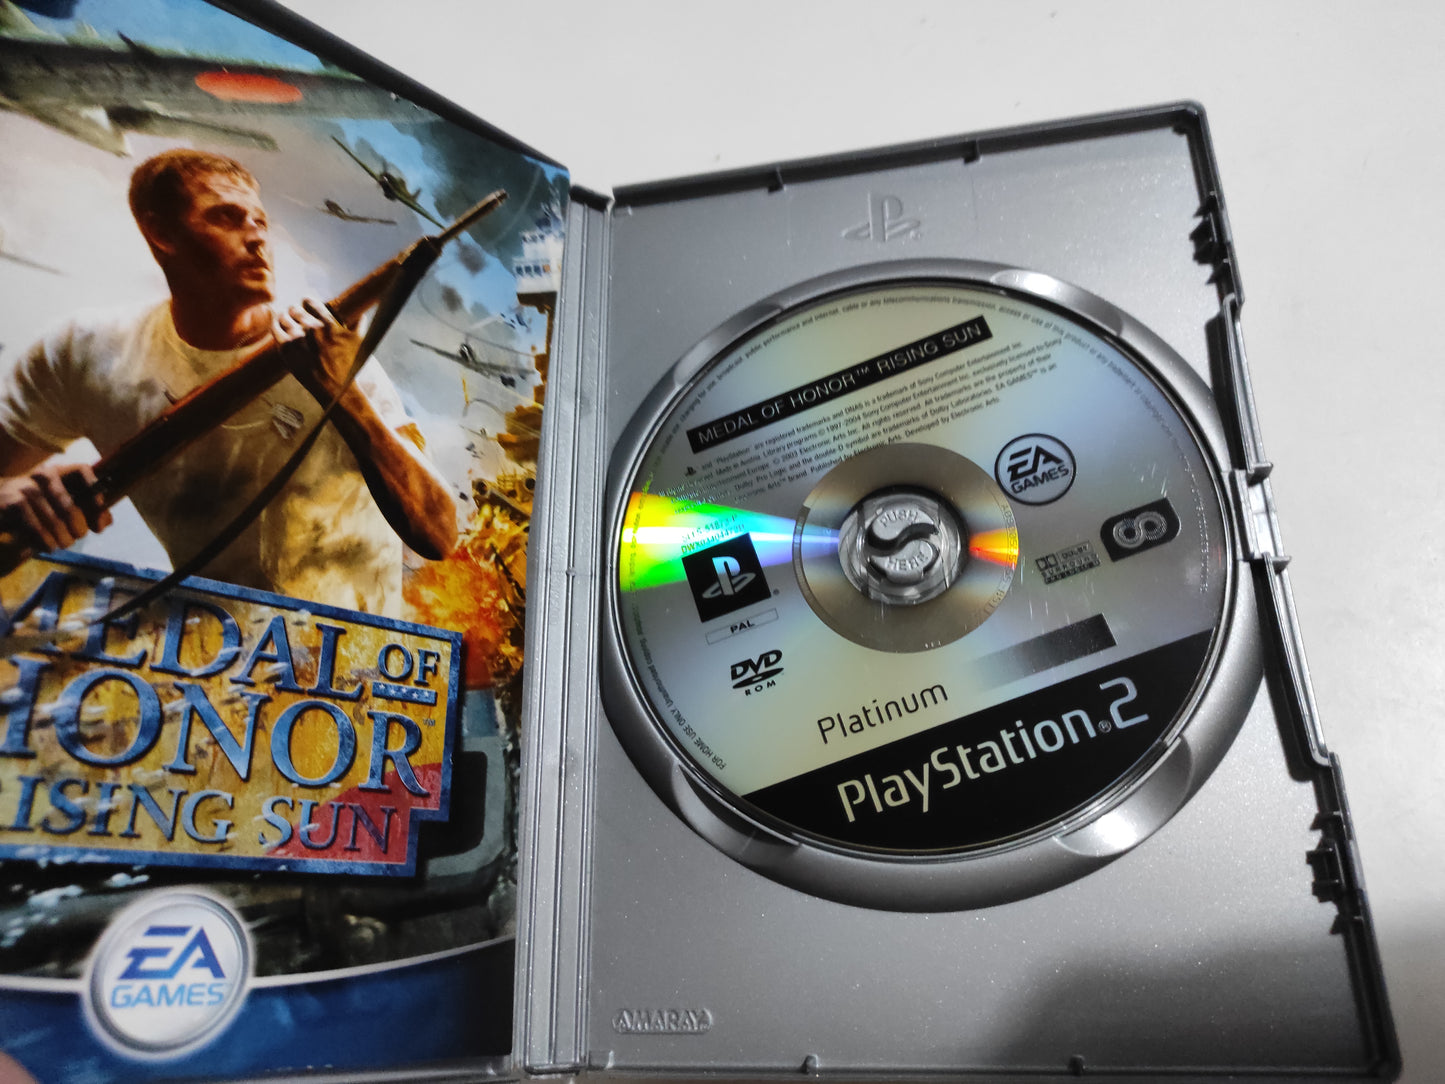 Gioco Playstation 2 ps2 Platinum medal of Honor rising sun